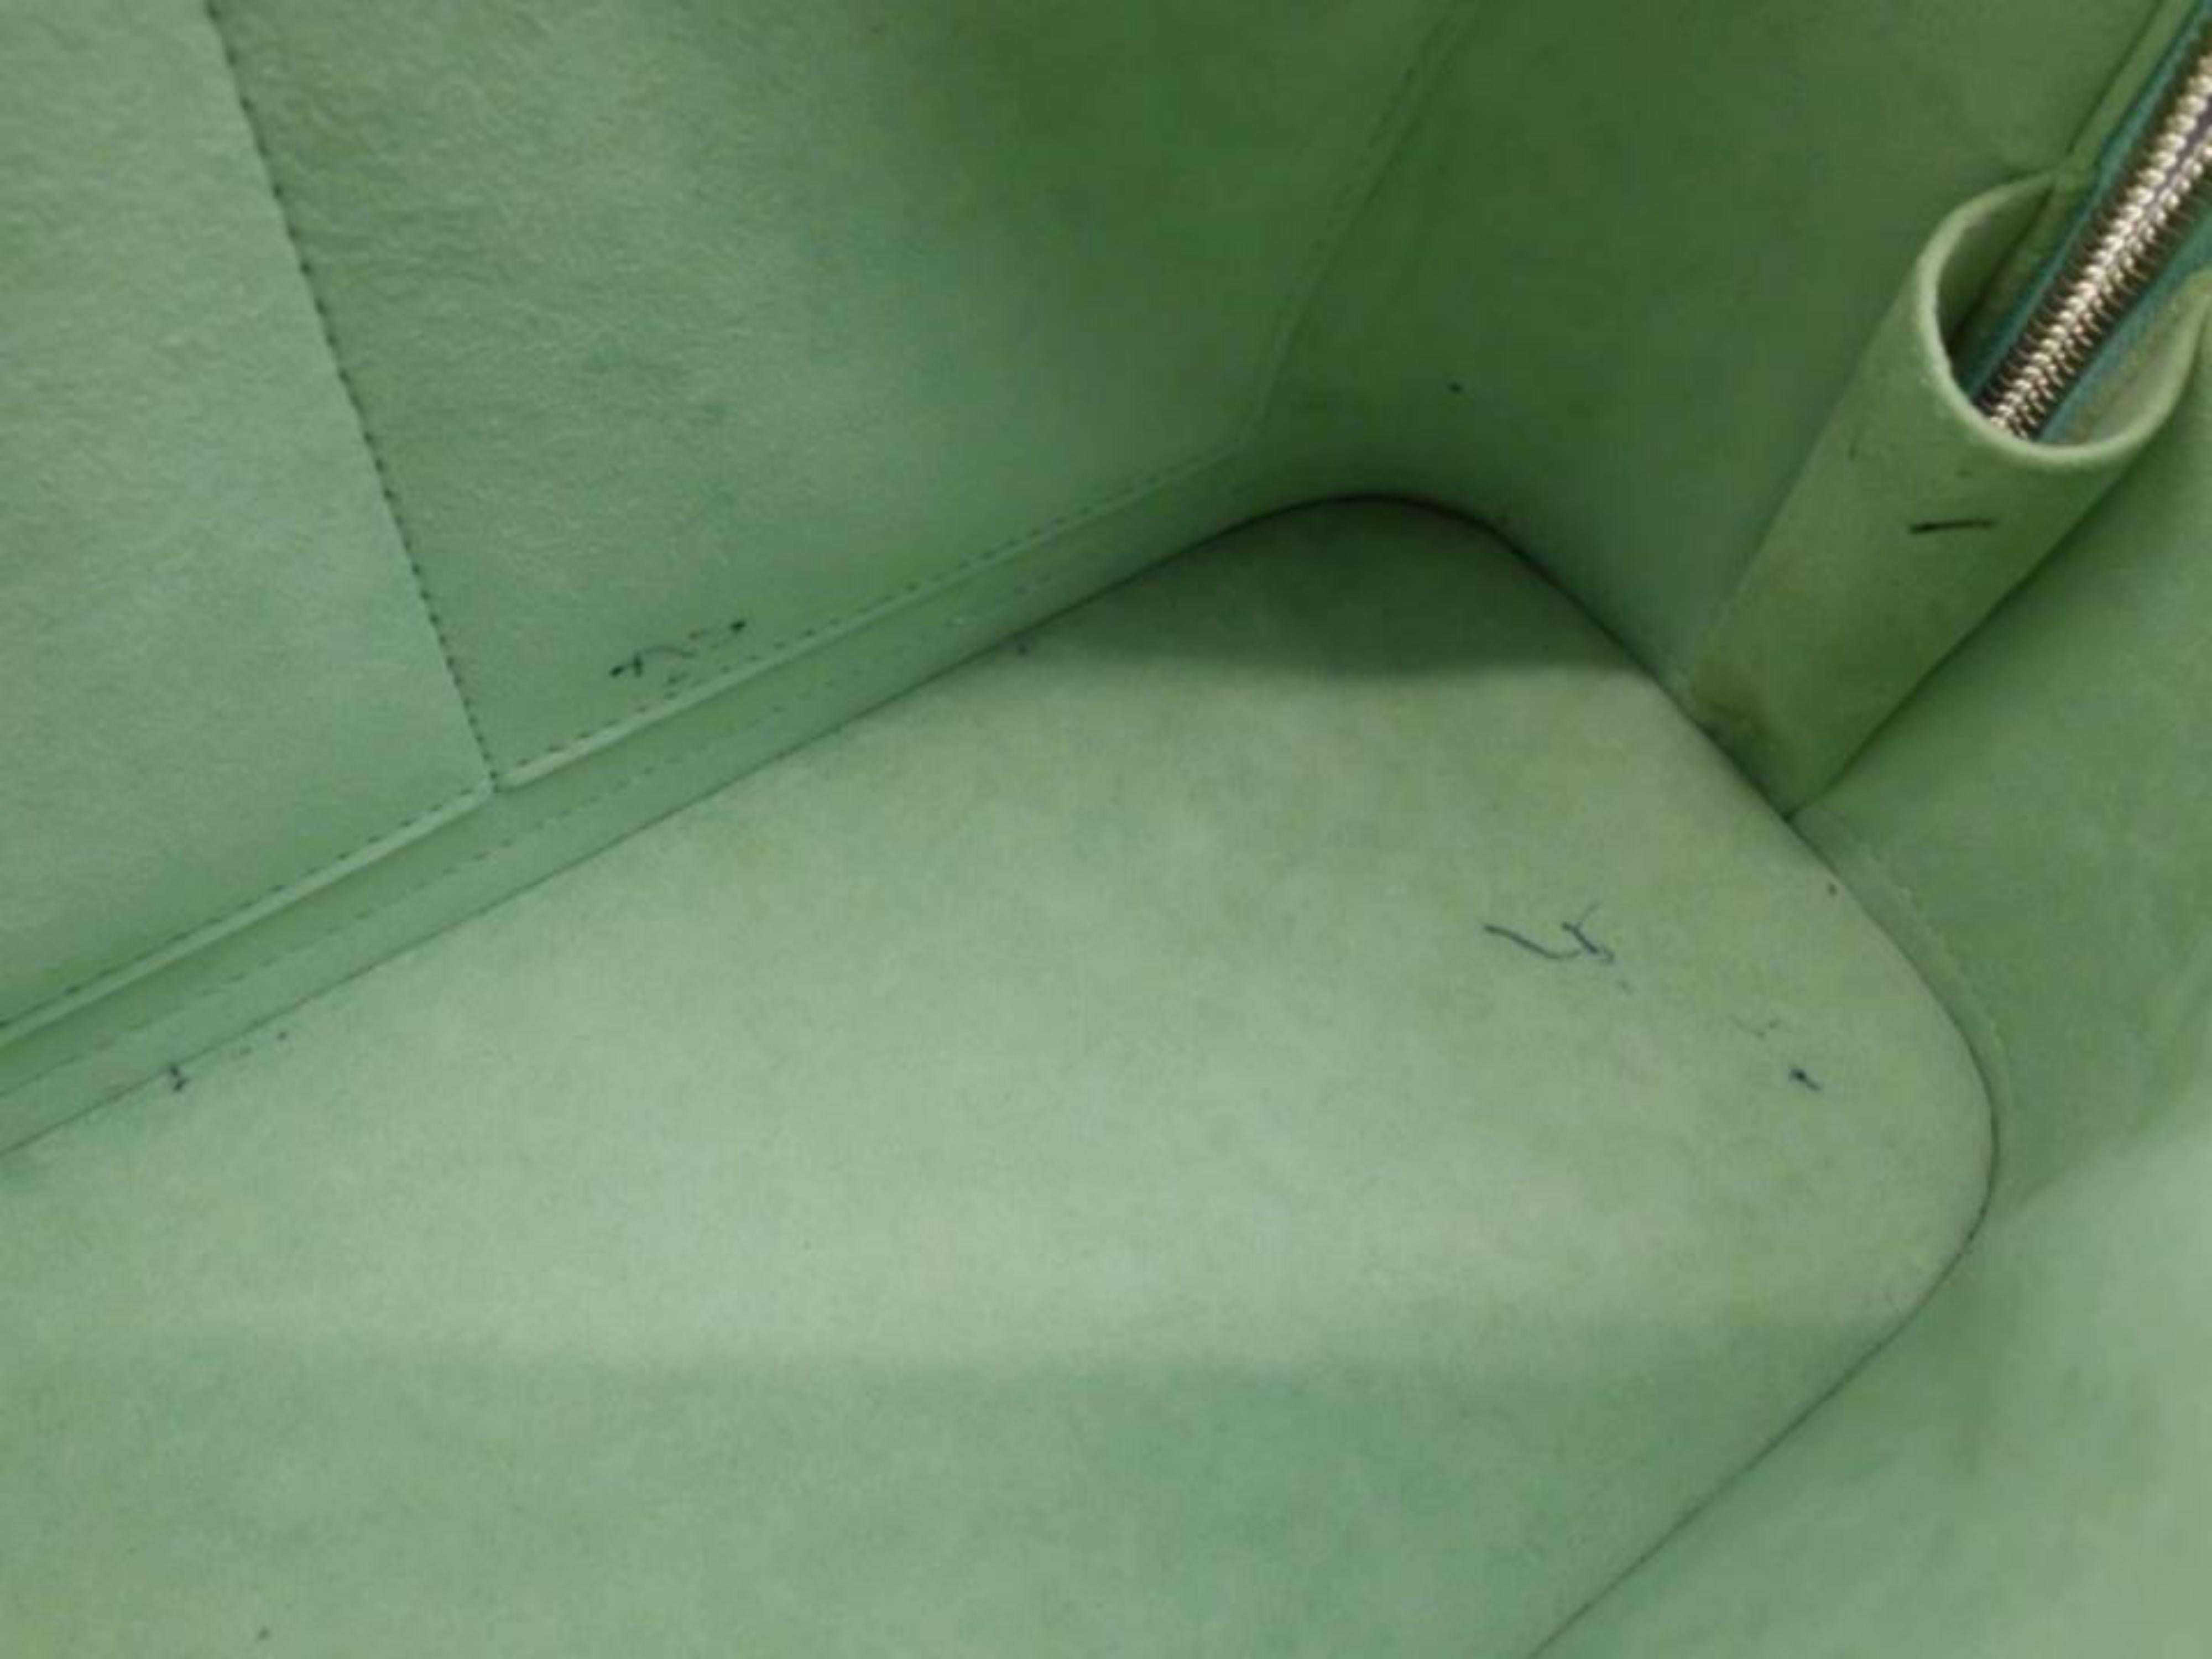 Louis Vuitton Alma Amande Pm 232546 Green Patent Leather Satchel For Sale 4